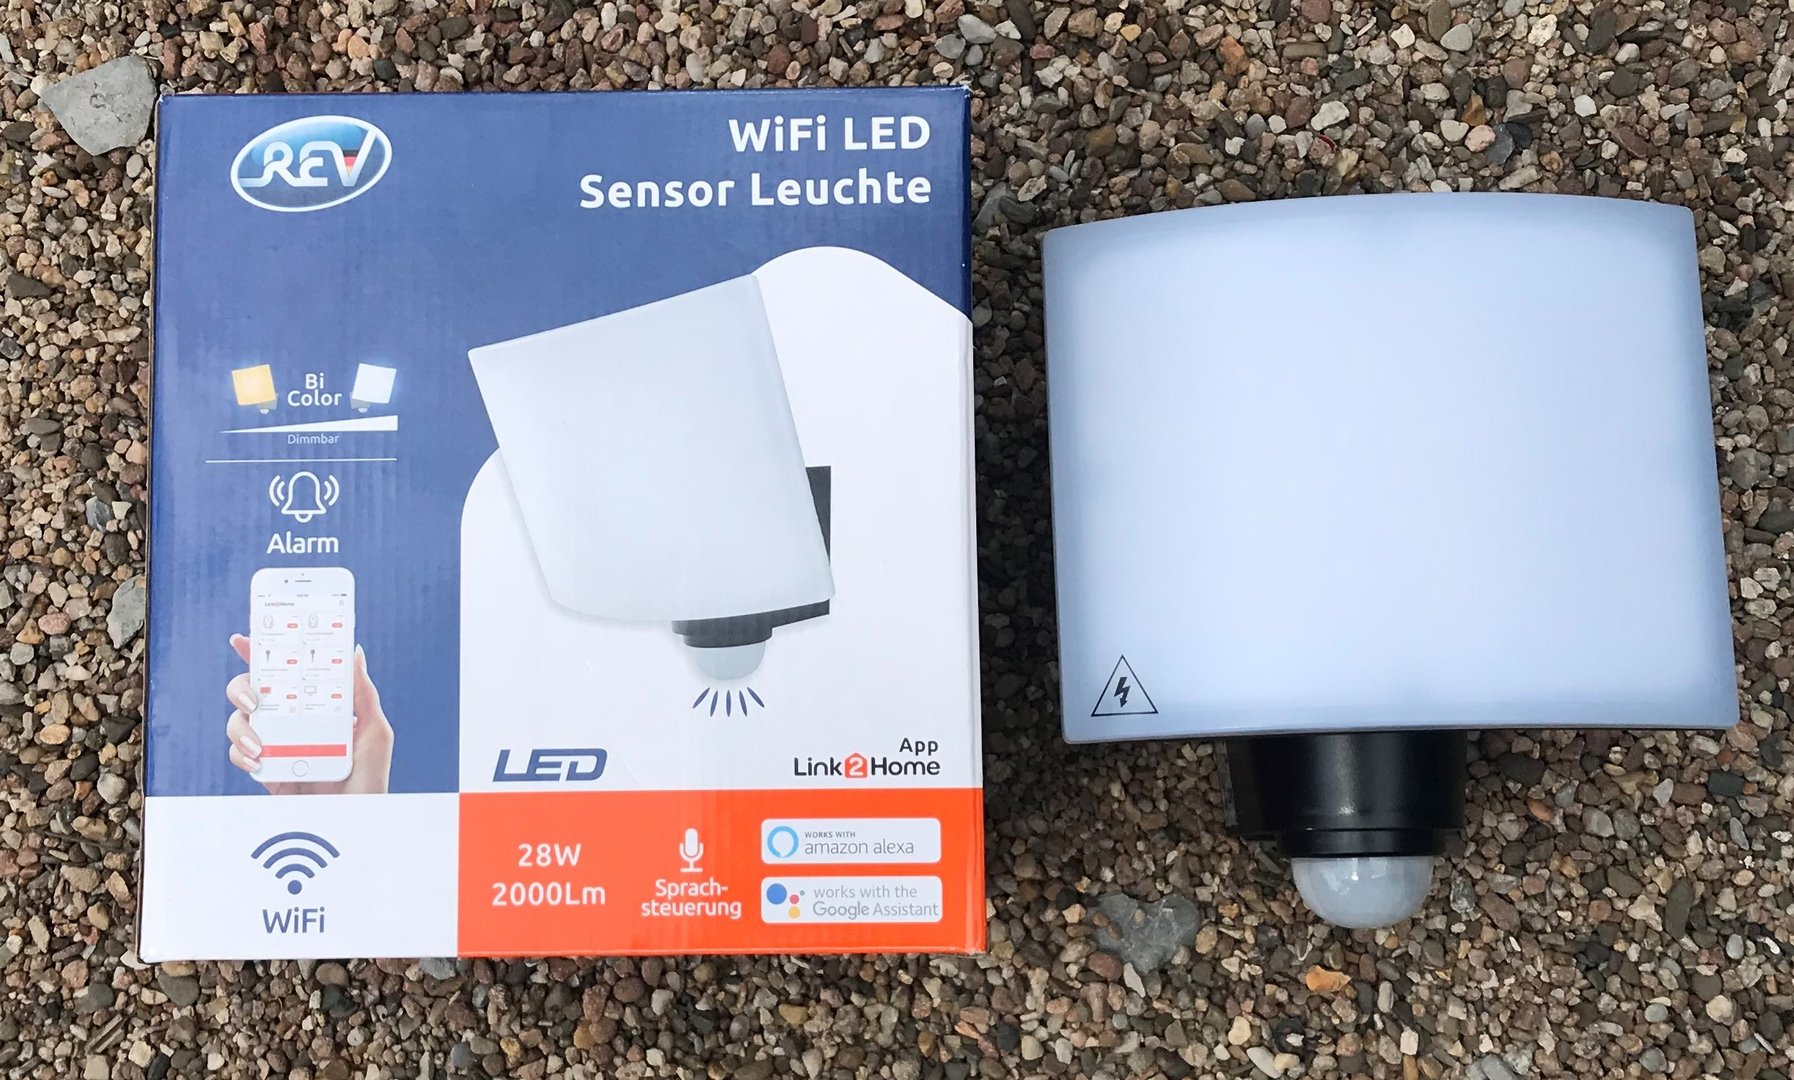 Wifi LED Sensor 28W Leuchte via Smartphone IP44 REV Steuerung